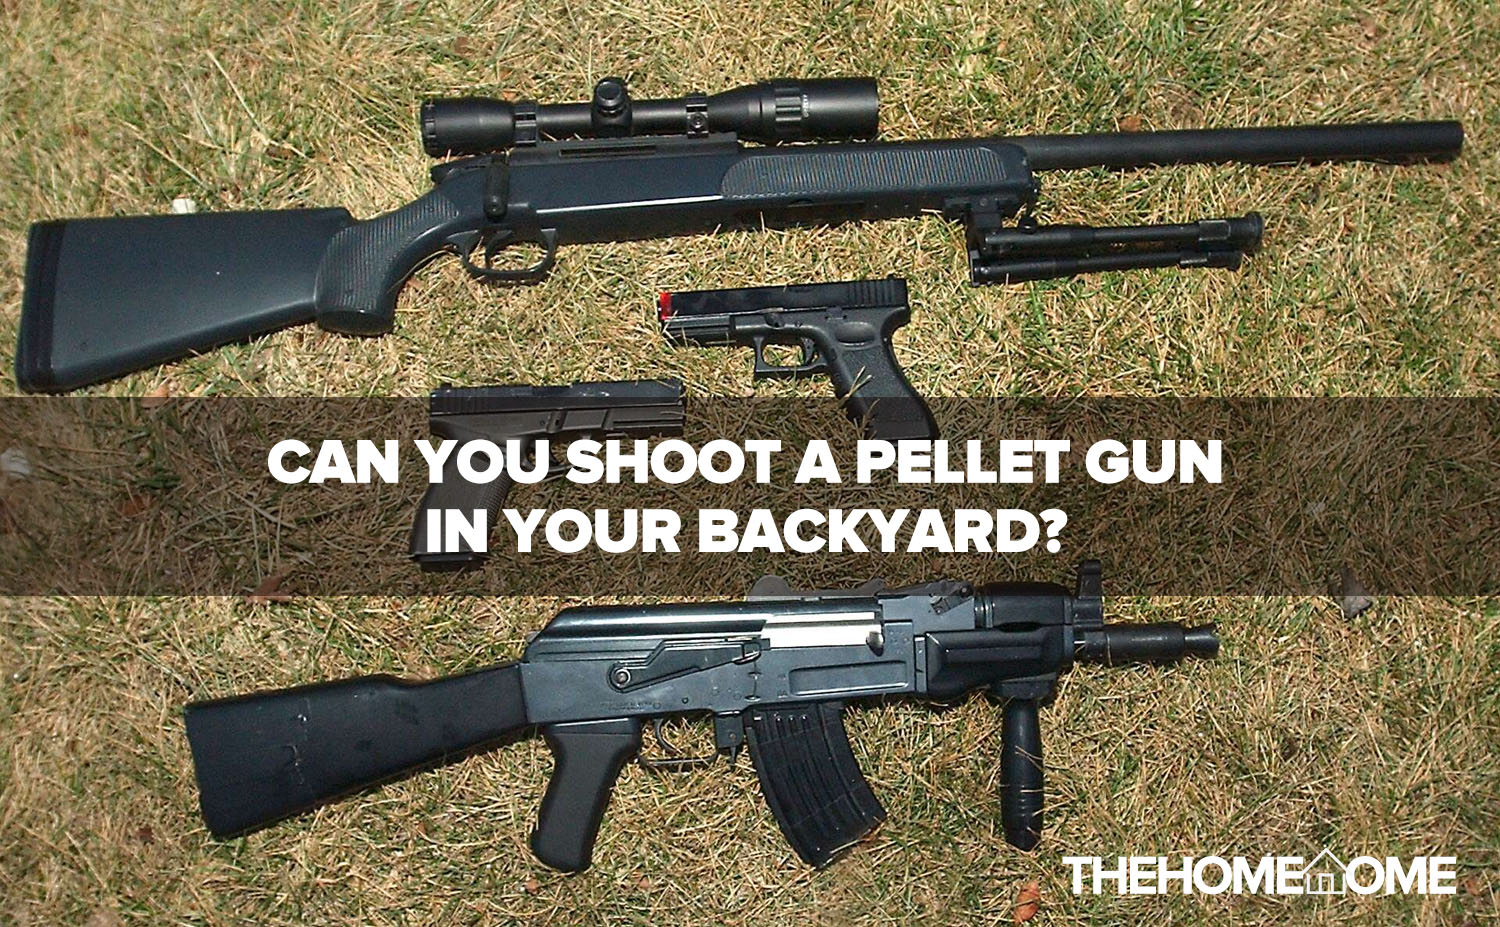 Can You Shoot A Pellet Gun In Your Backyard? - Can You Shoot A Pellet Gun In Your BackyarD